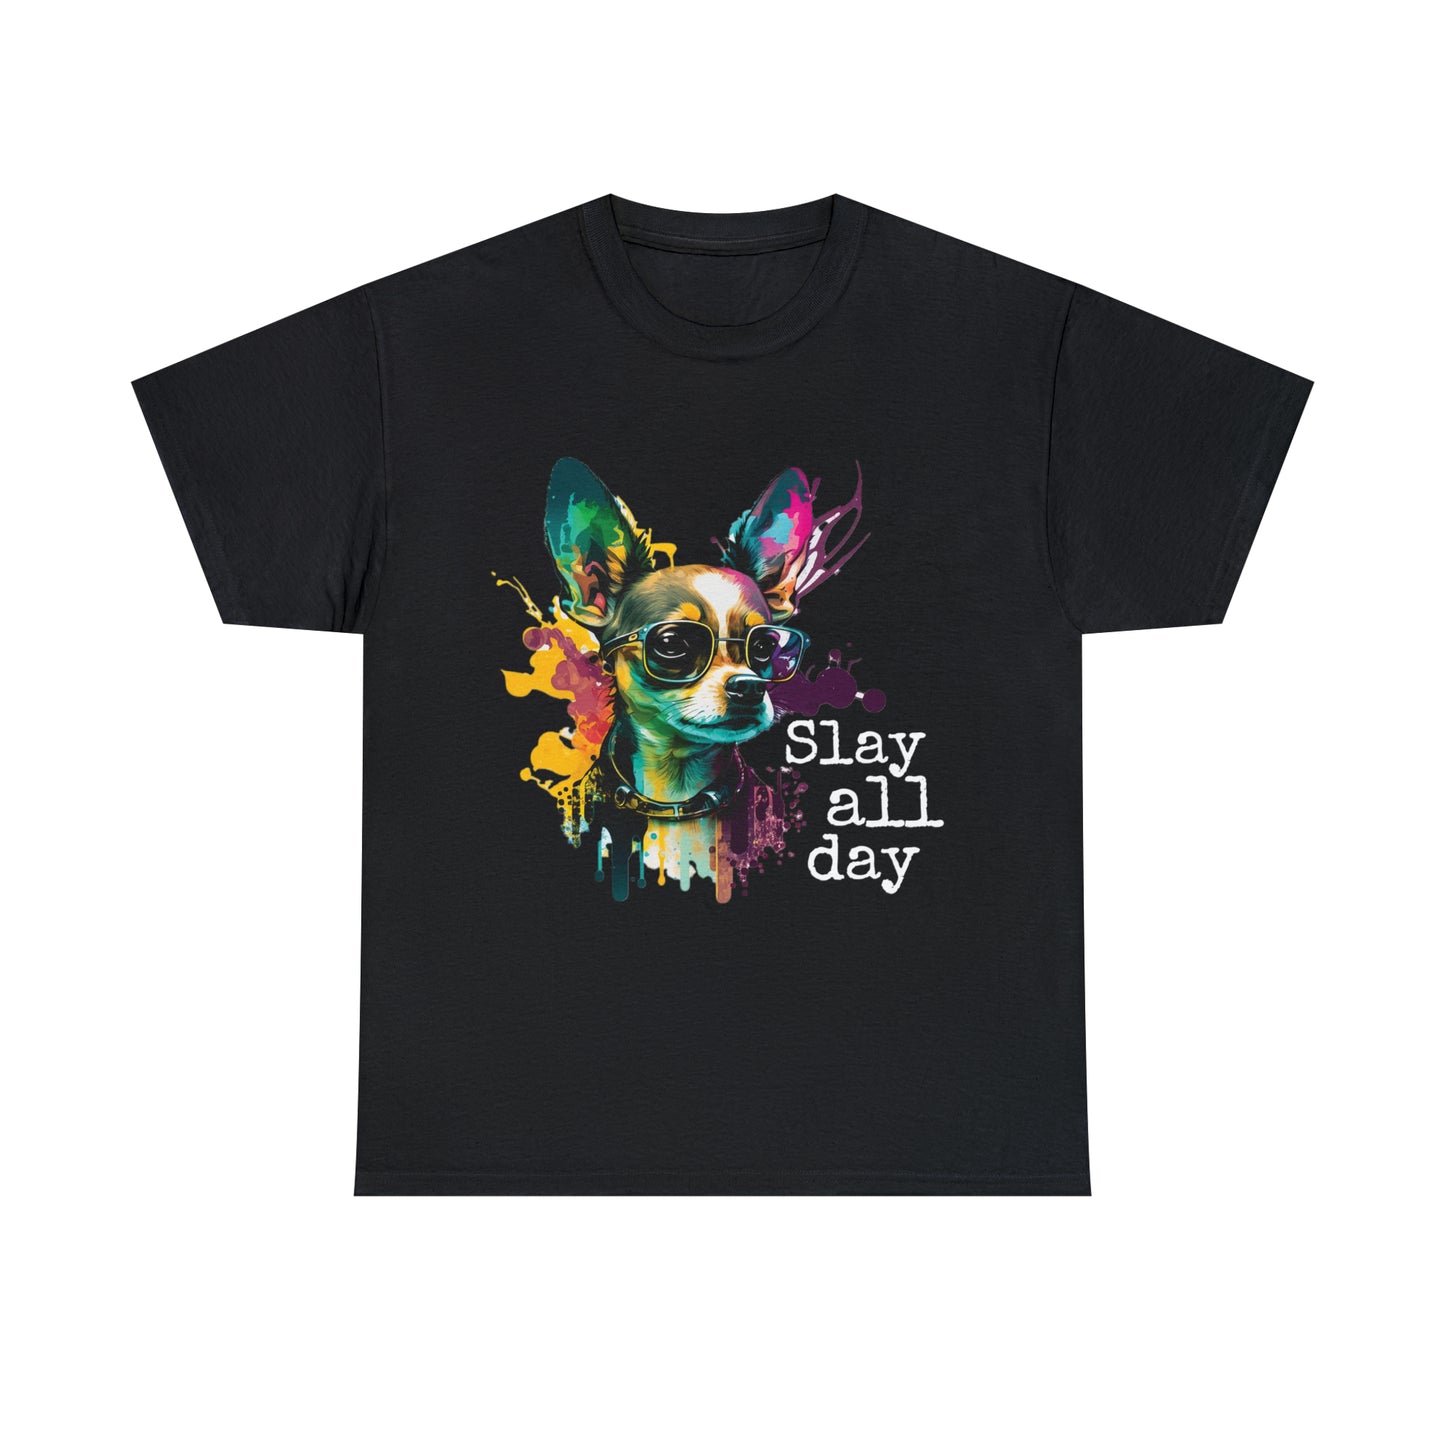 Chihuahua t-shirt